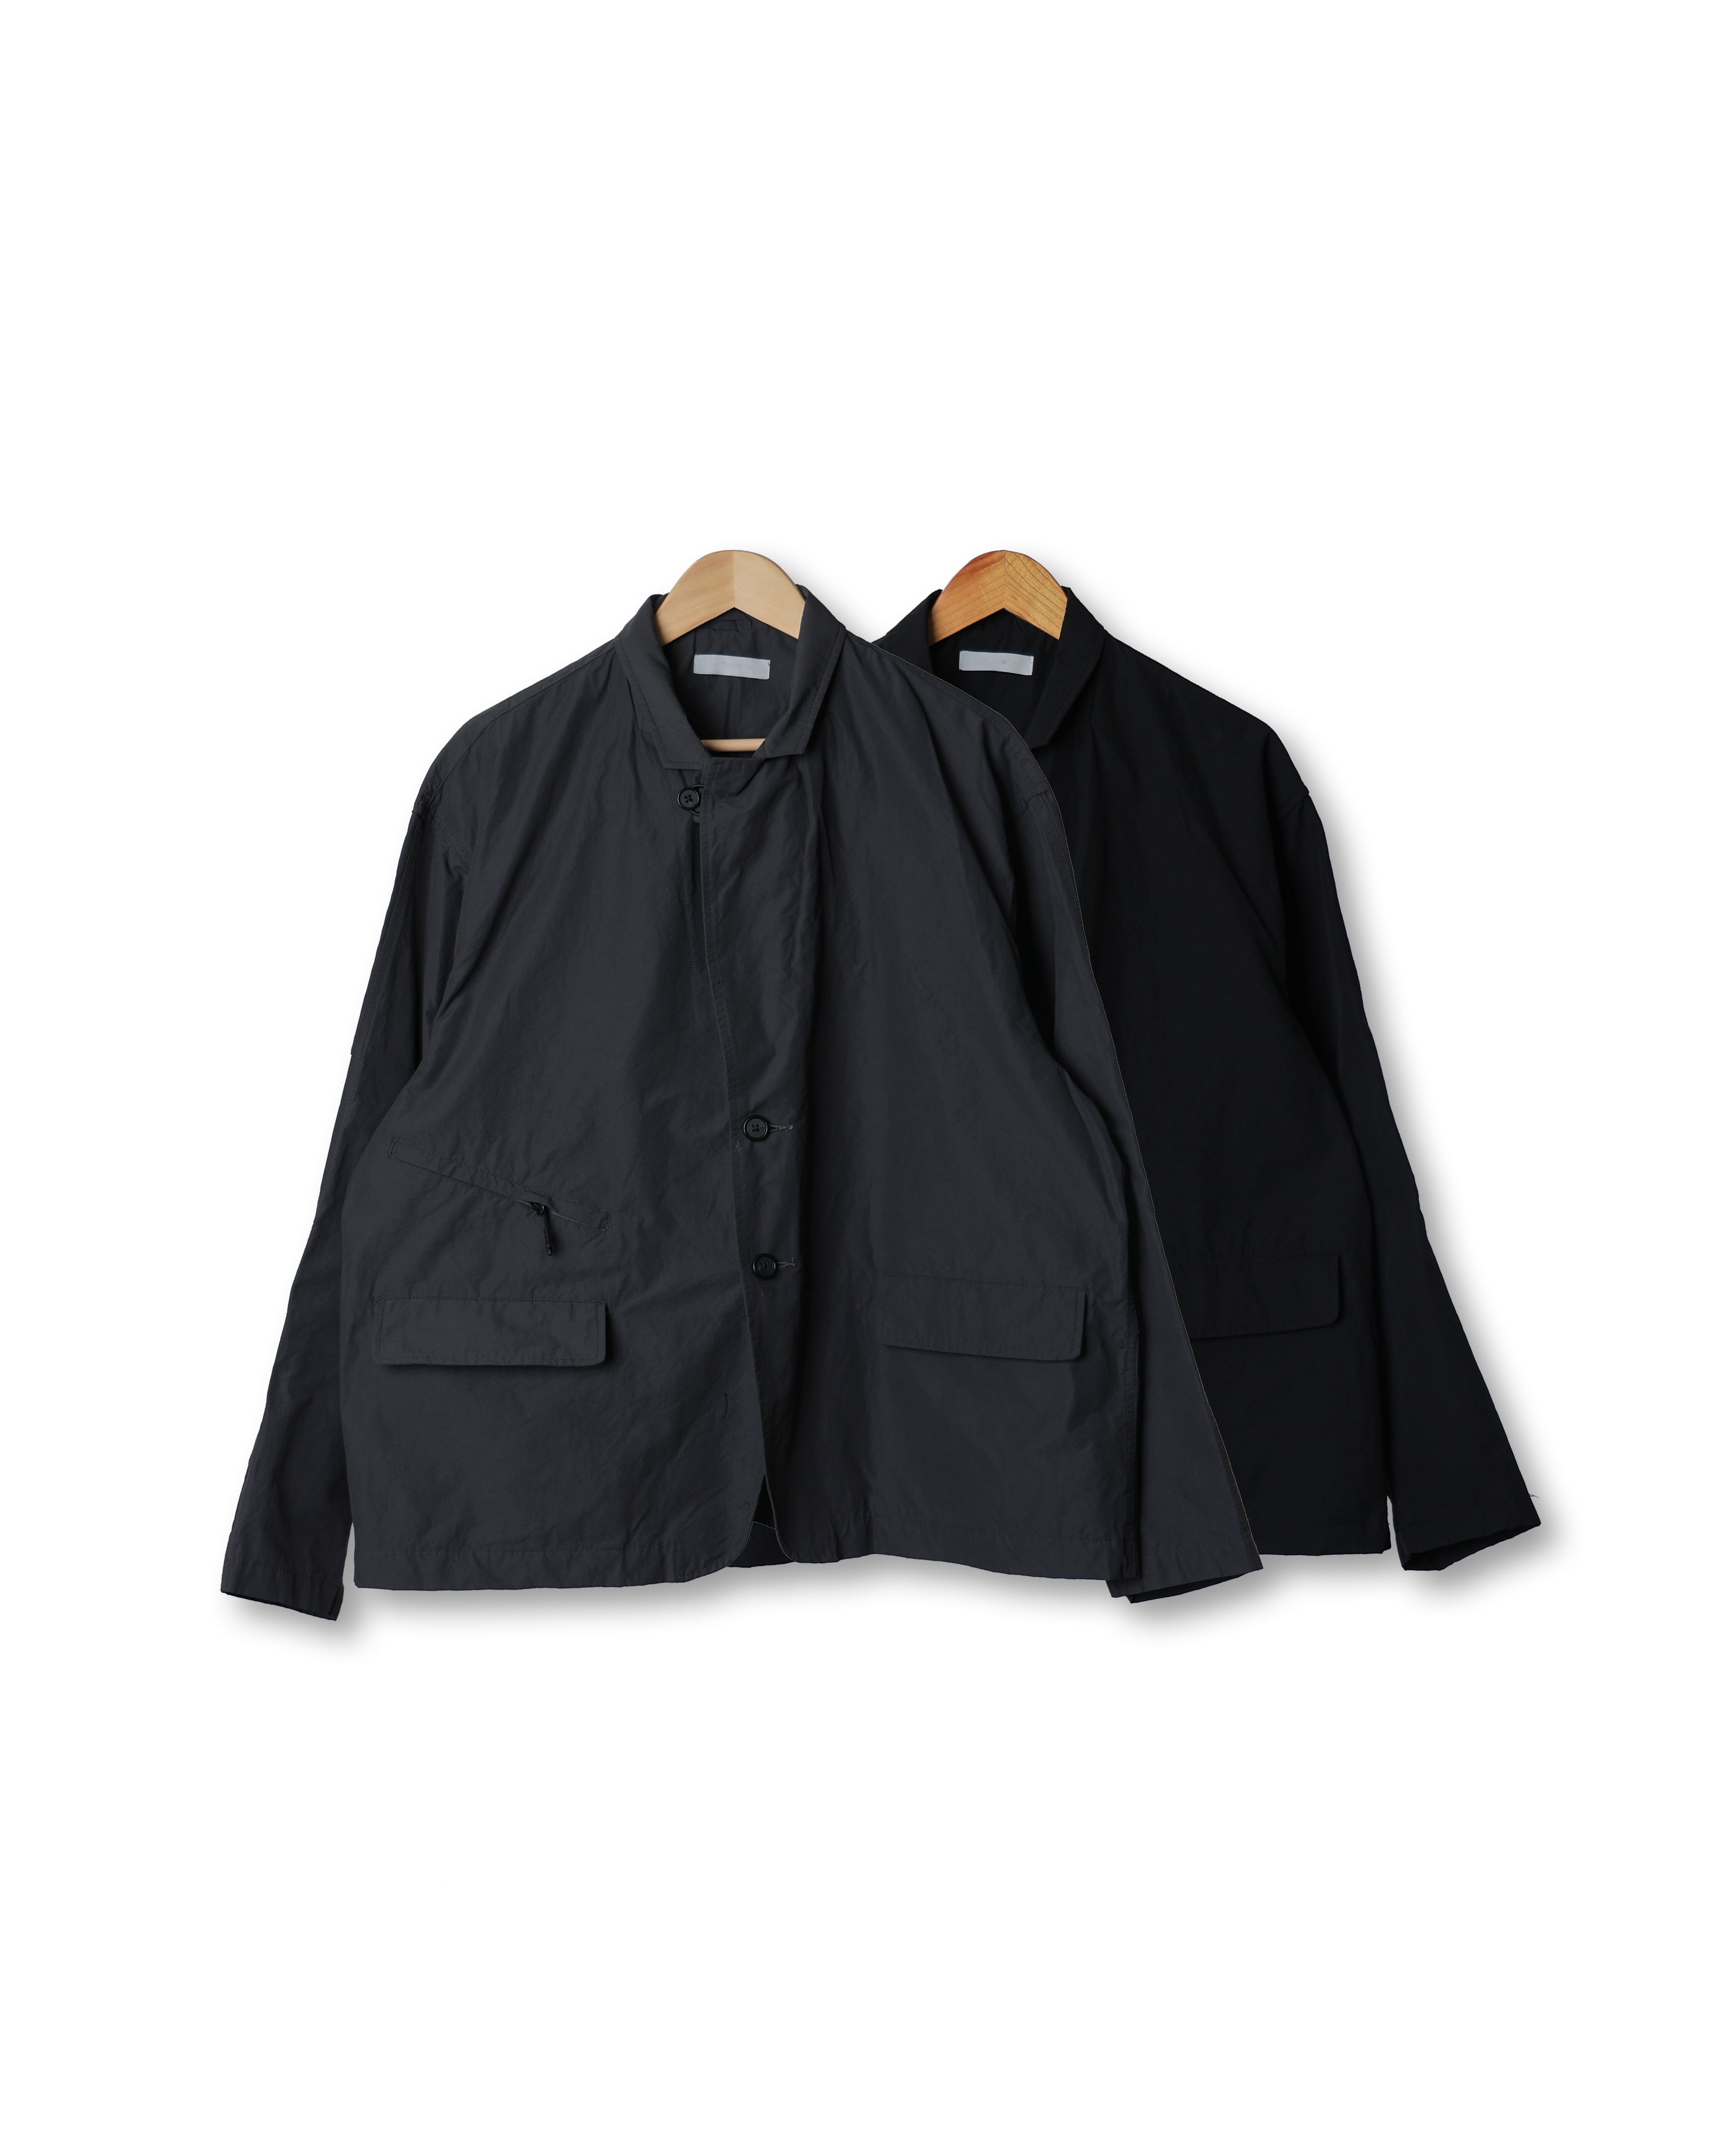 SPEC L.W Casual Nylon Blazer Jacket (Black/Charcoal)